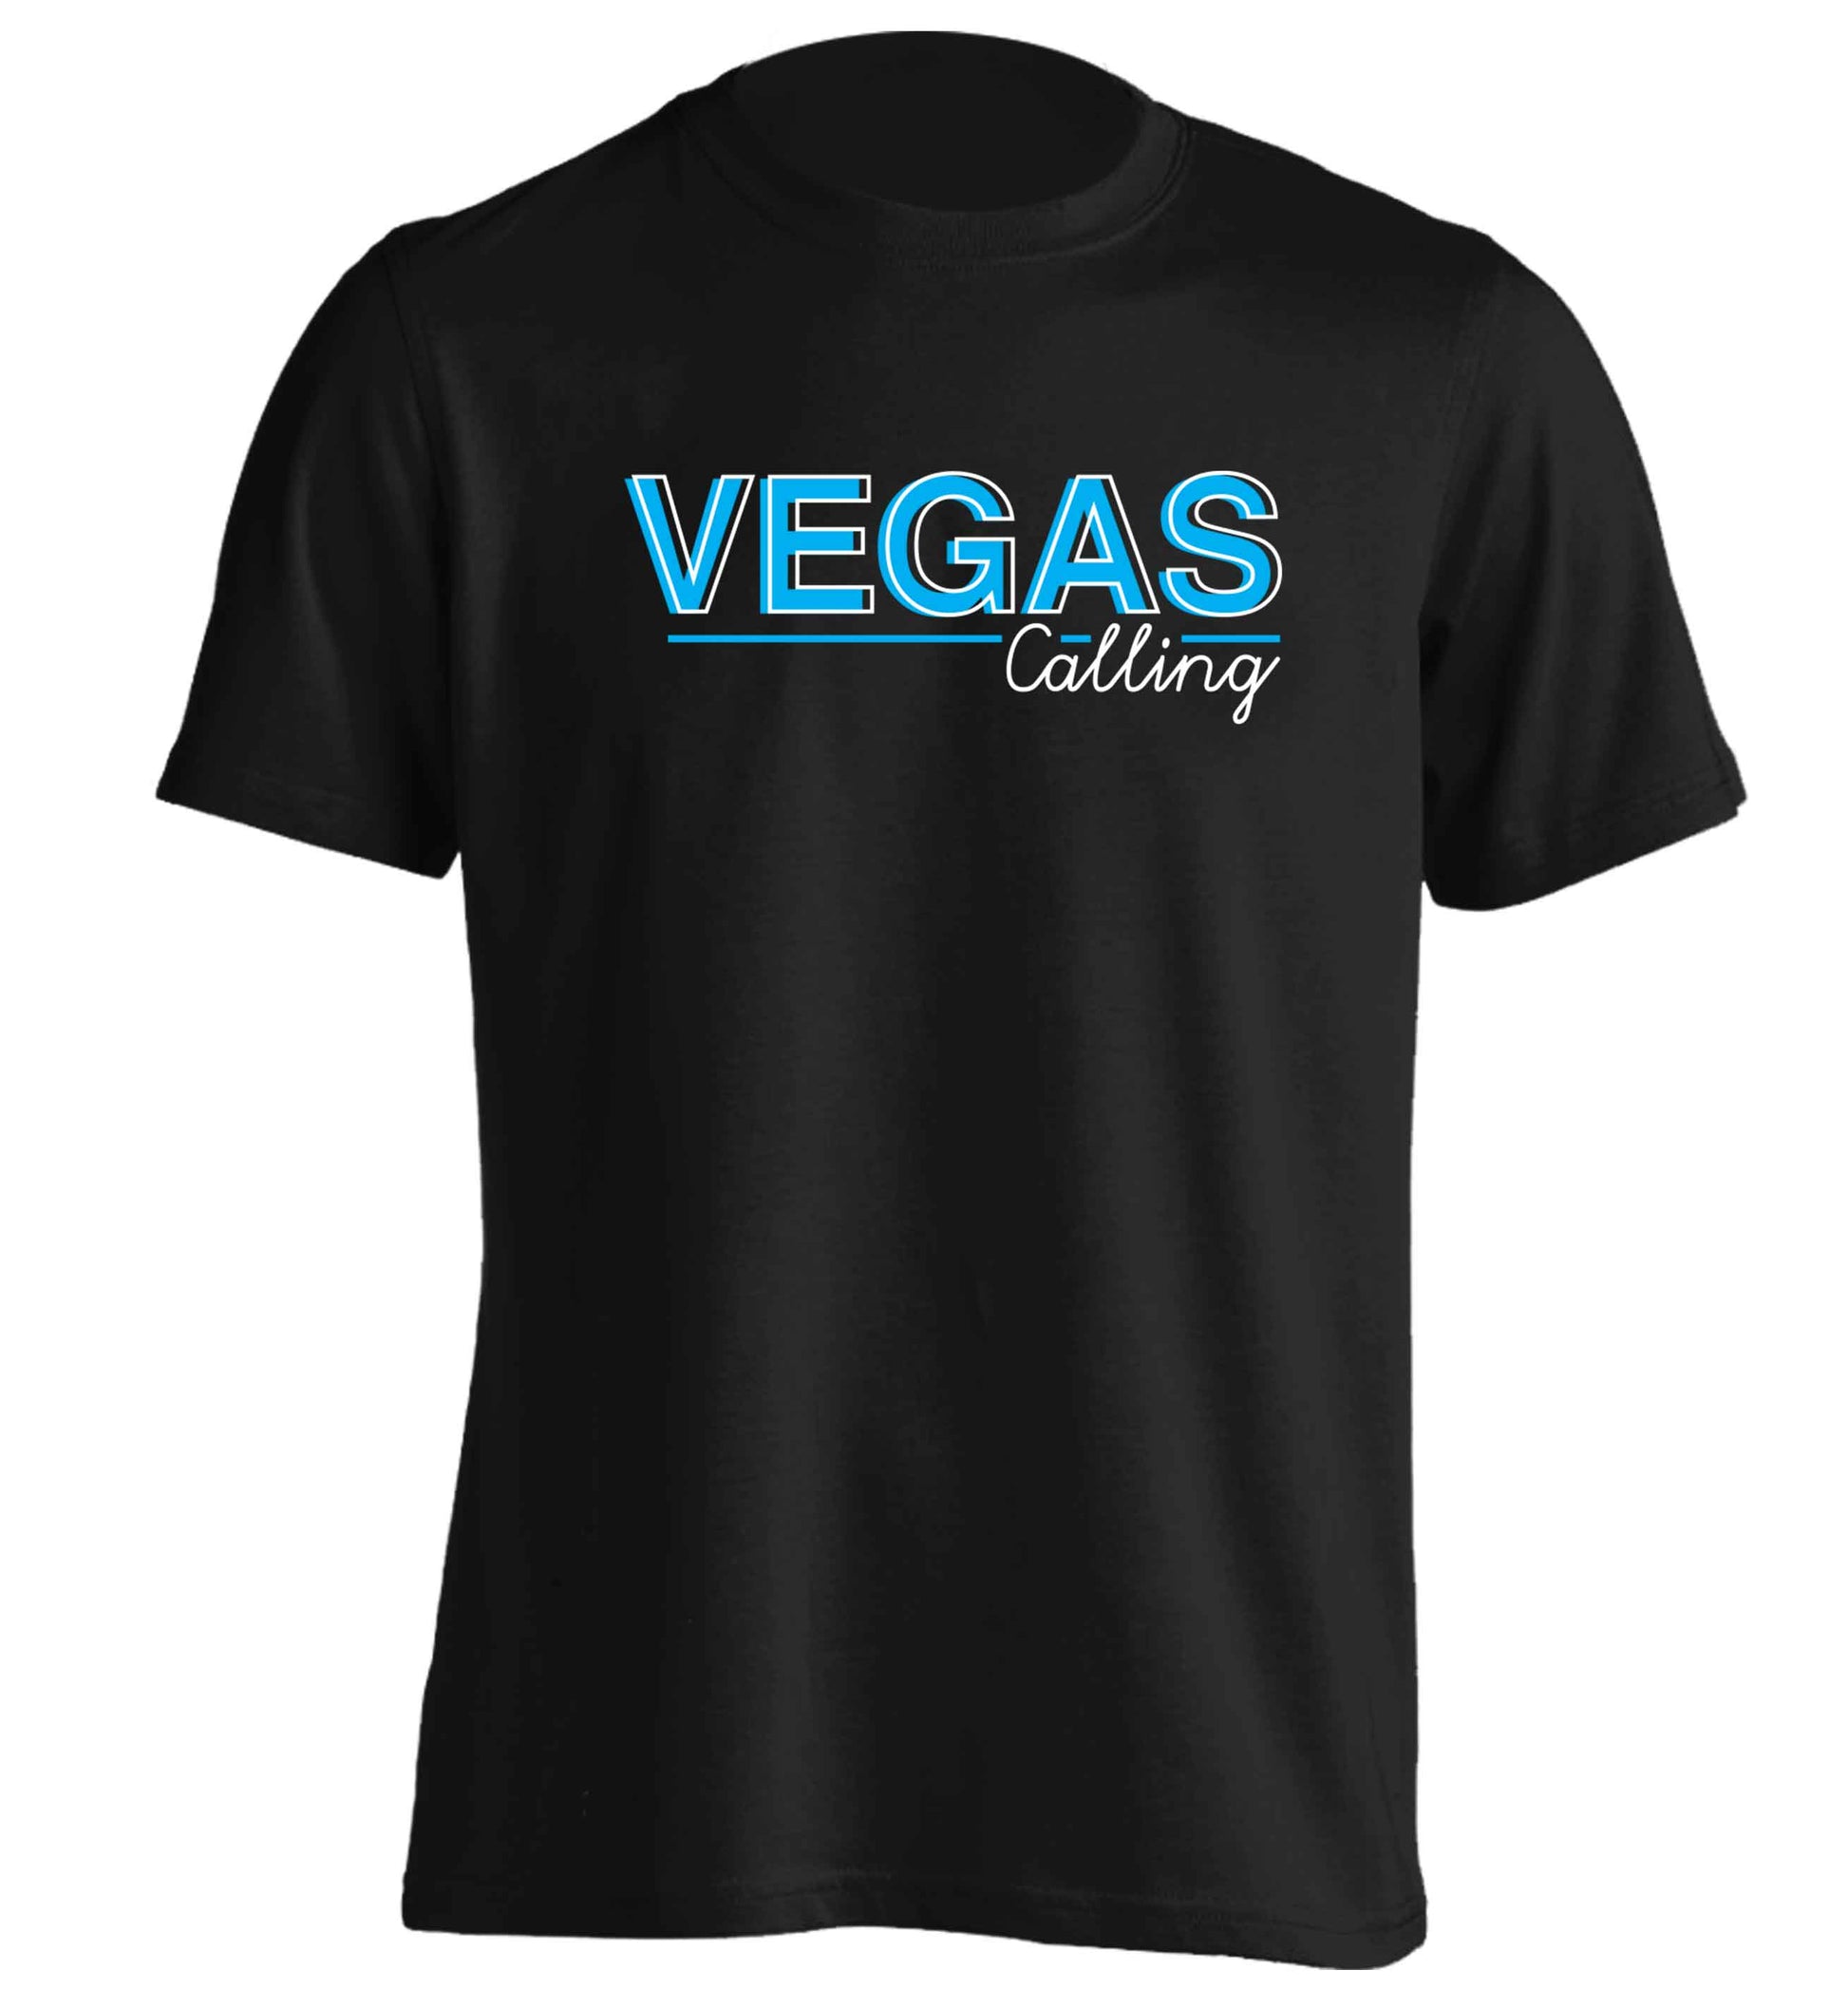 Vegas calling adults unisex black Tshirt 2XL